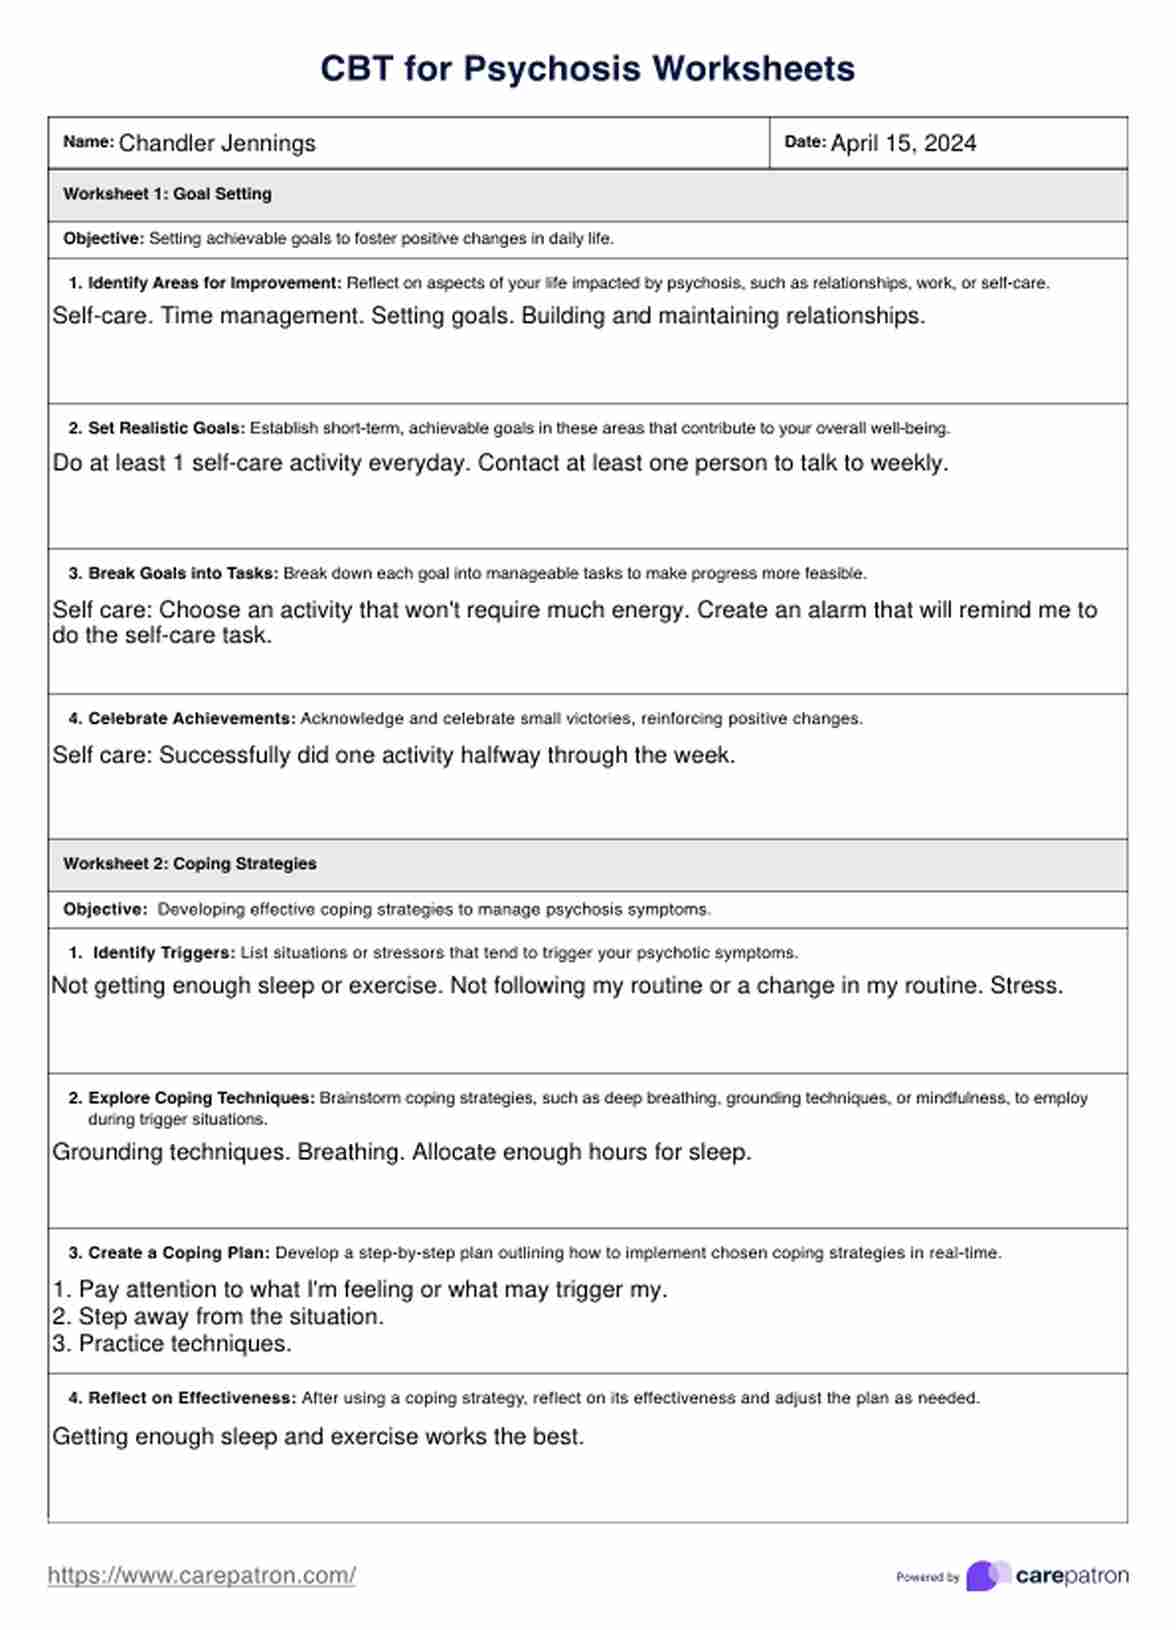 CBT for Psychosis Worksheets PDF PDF Example